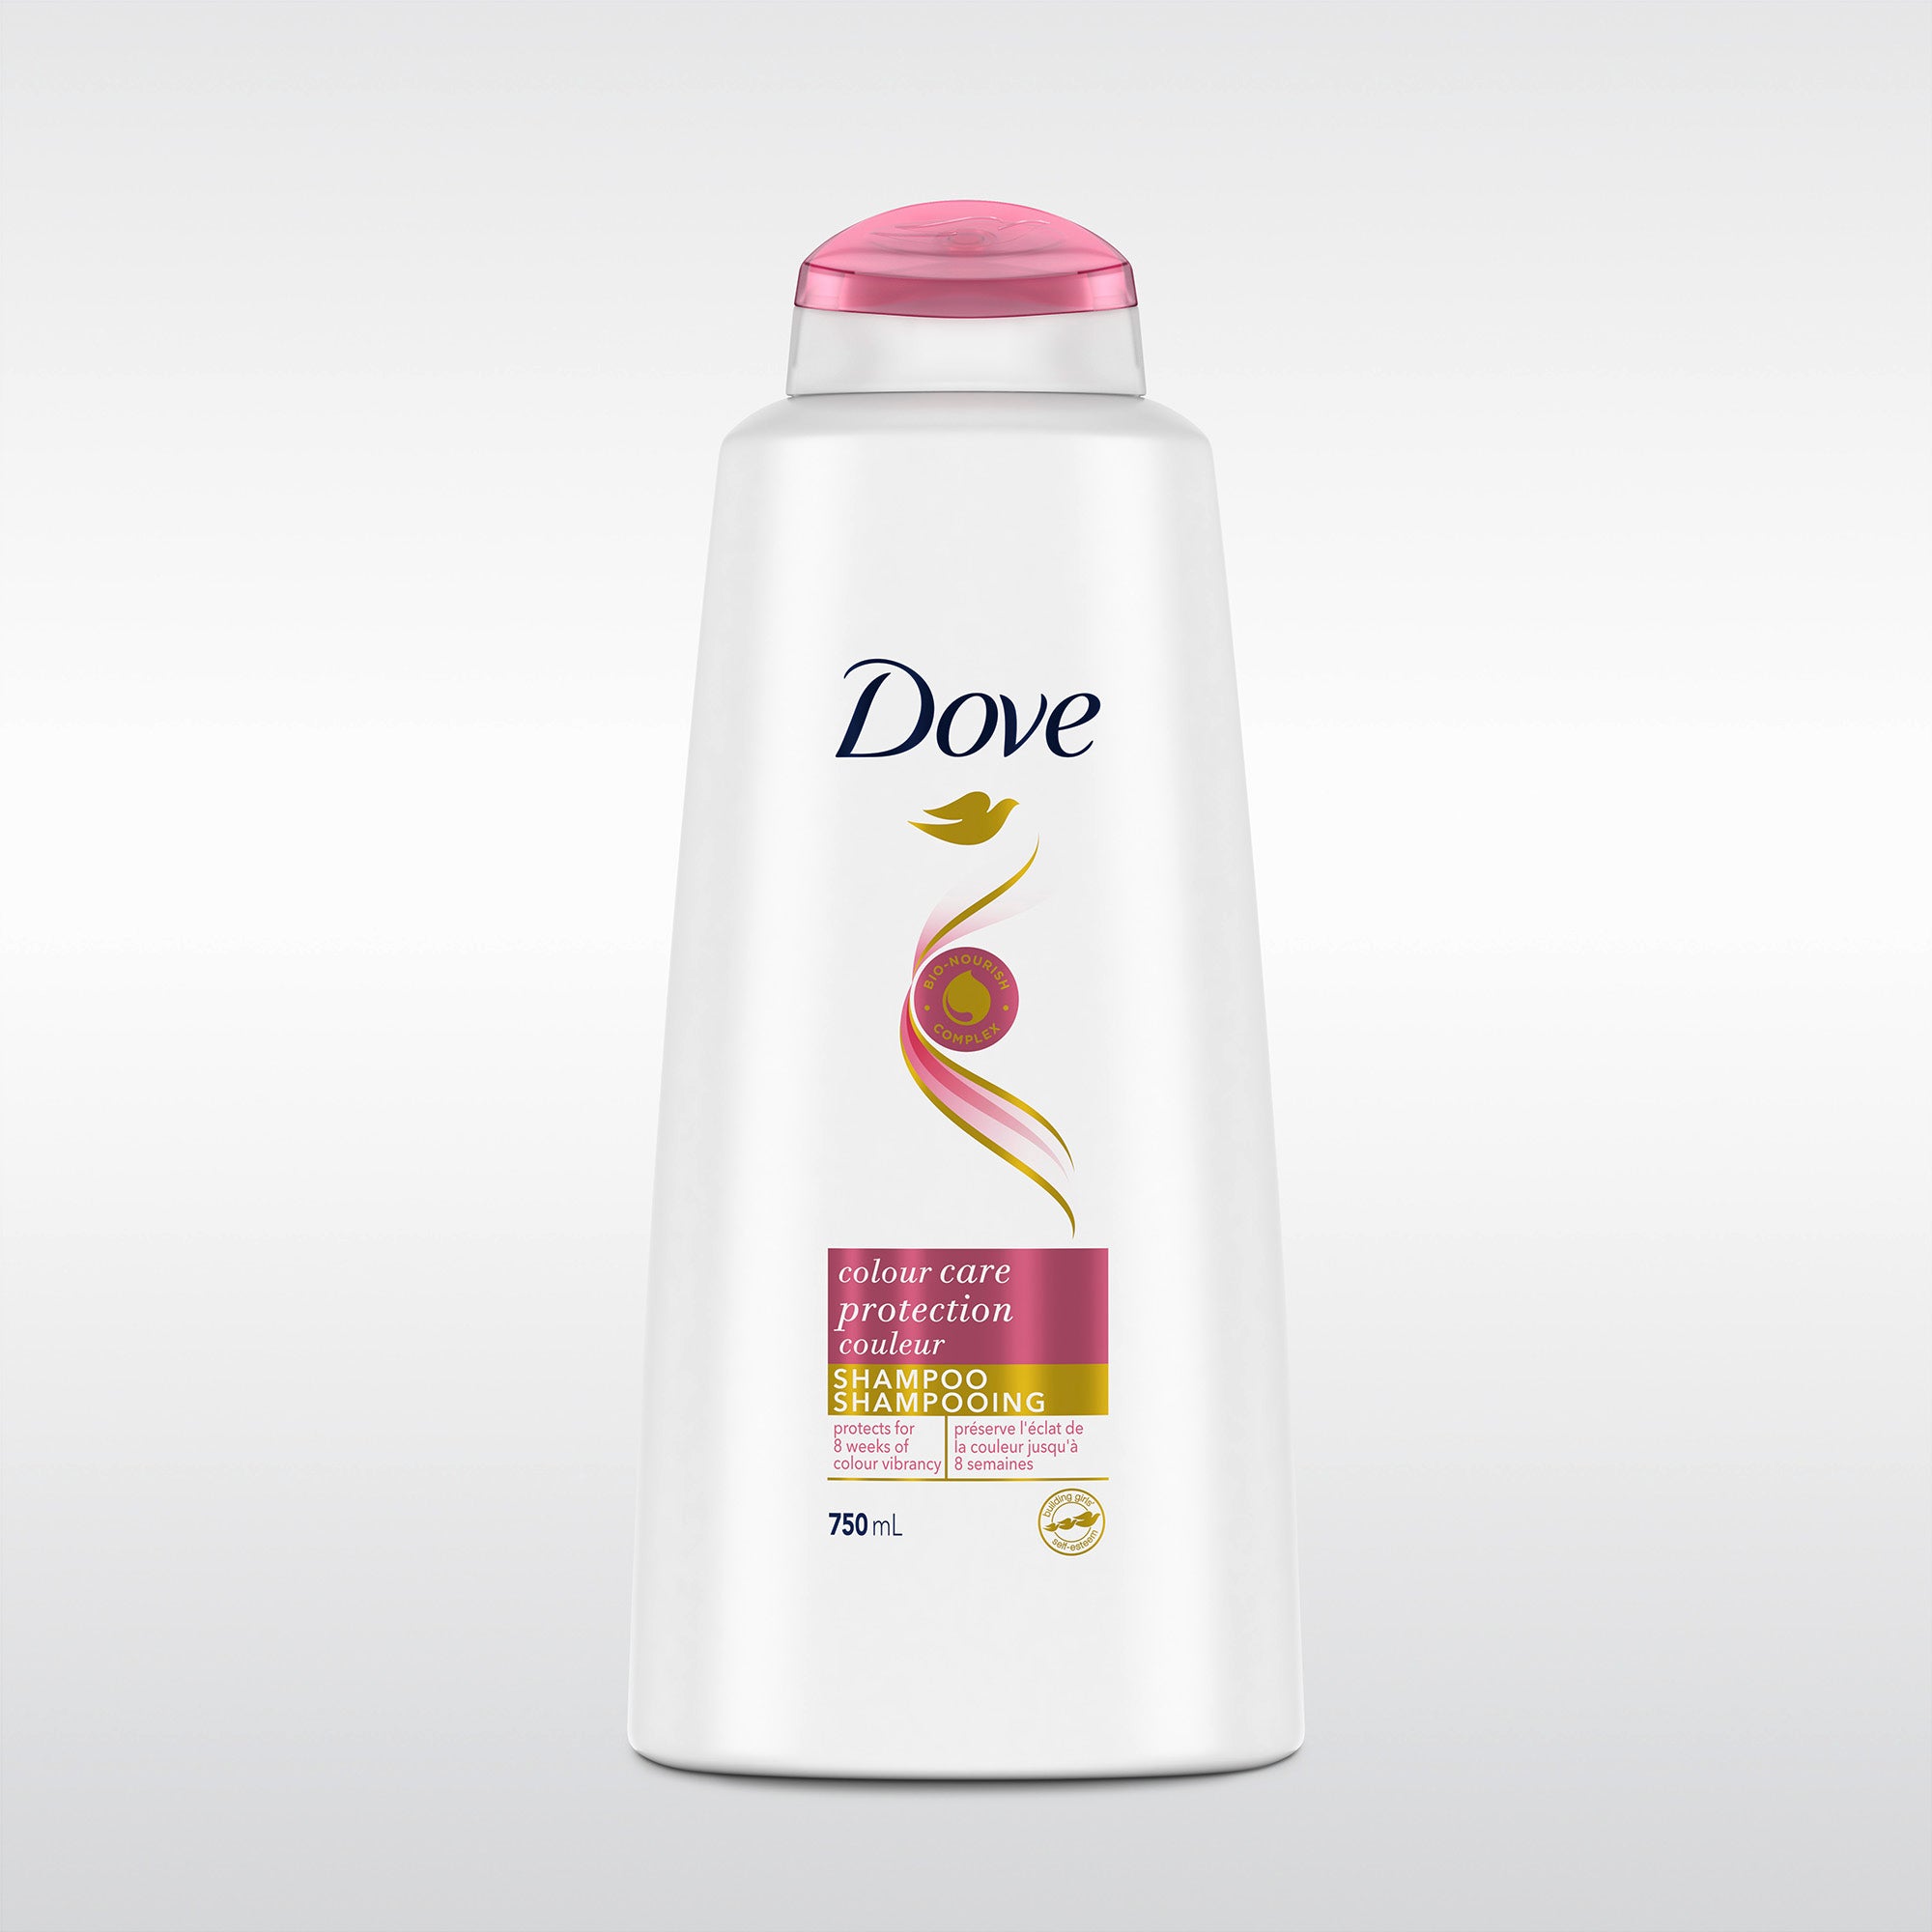 Dove colour care protection shampoo